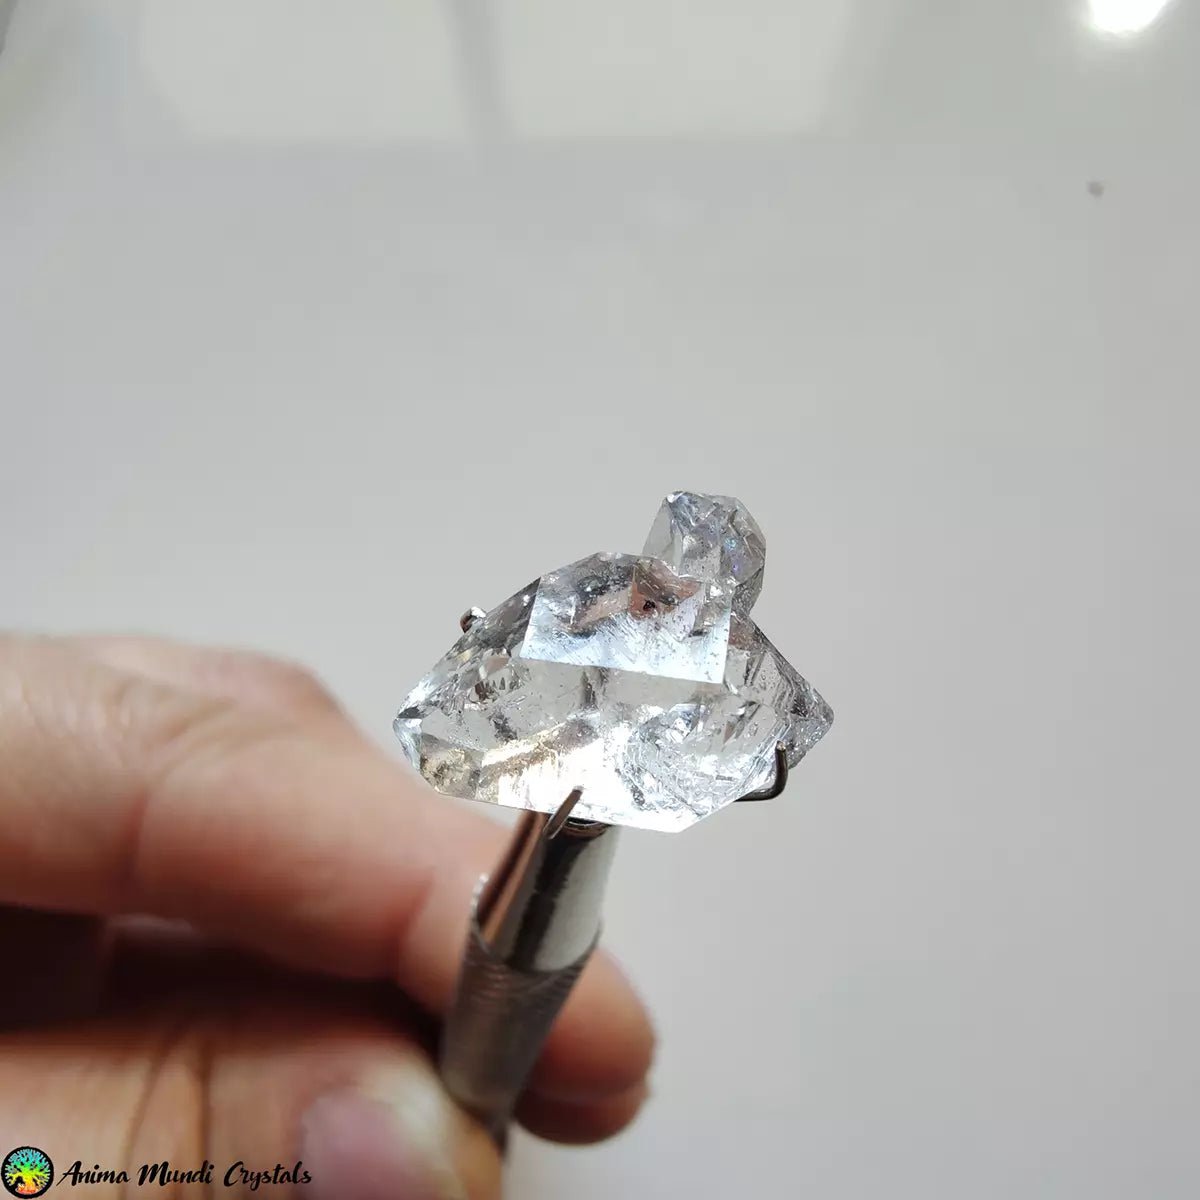 Cuarzo diamante "Herkimer" de 16 mm - Cristales Anima Mundi